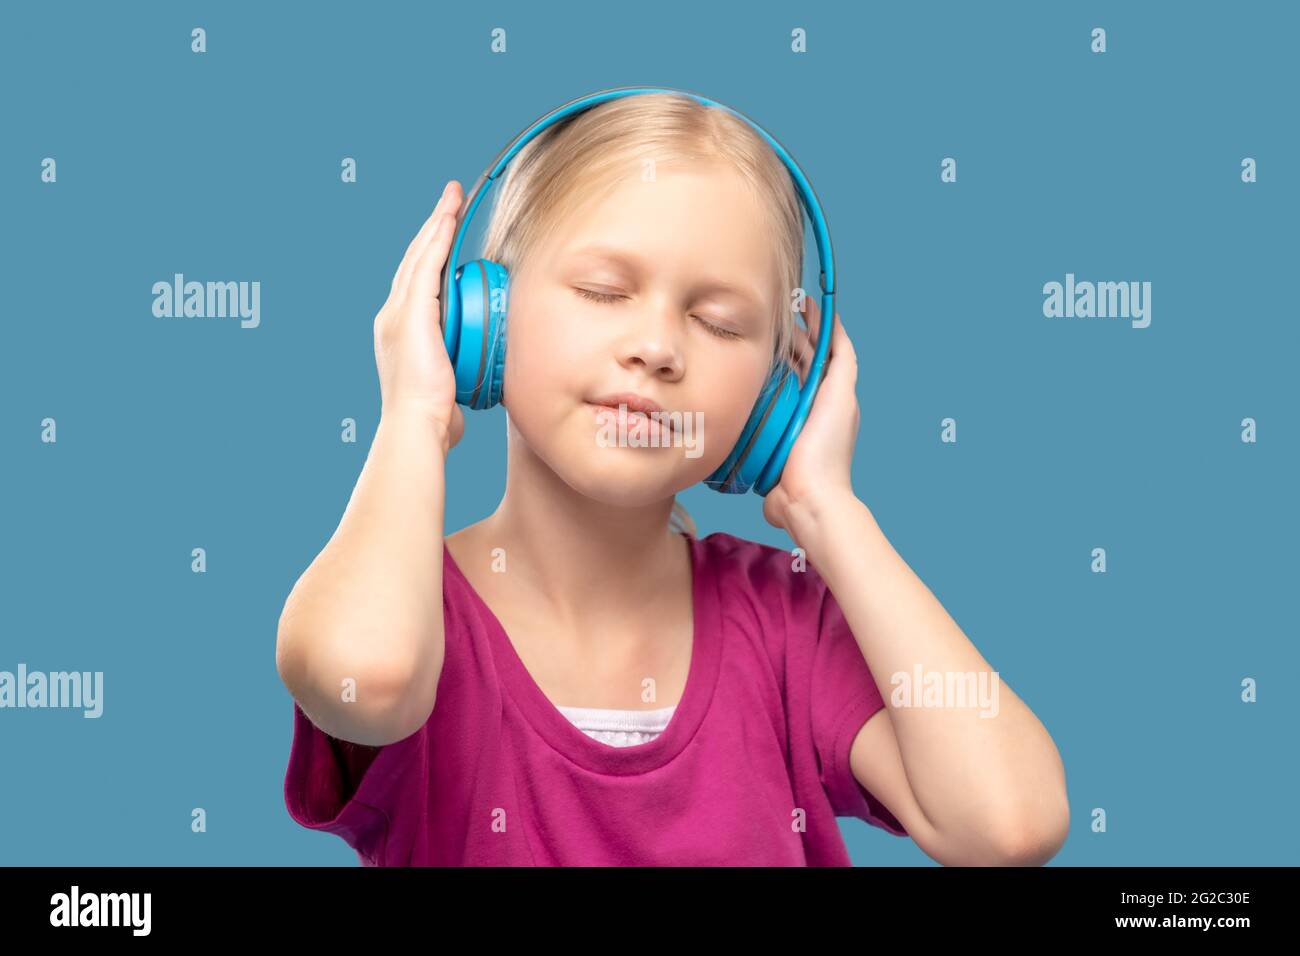 Primary school girl with closed eyes wearing headphones Stock Photo